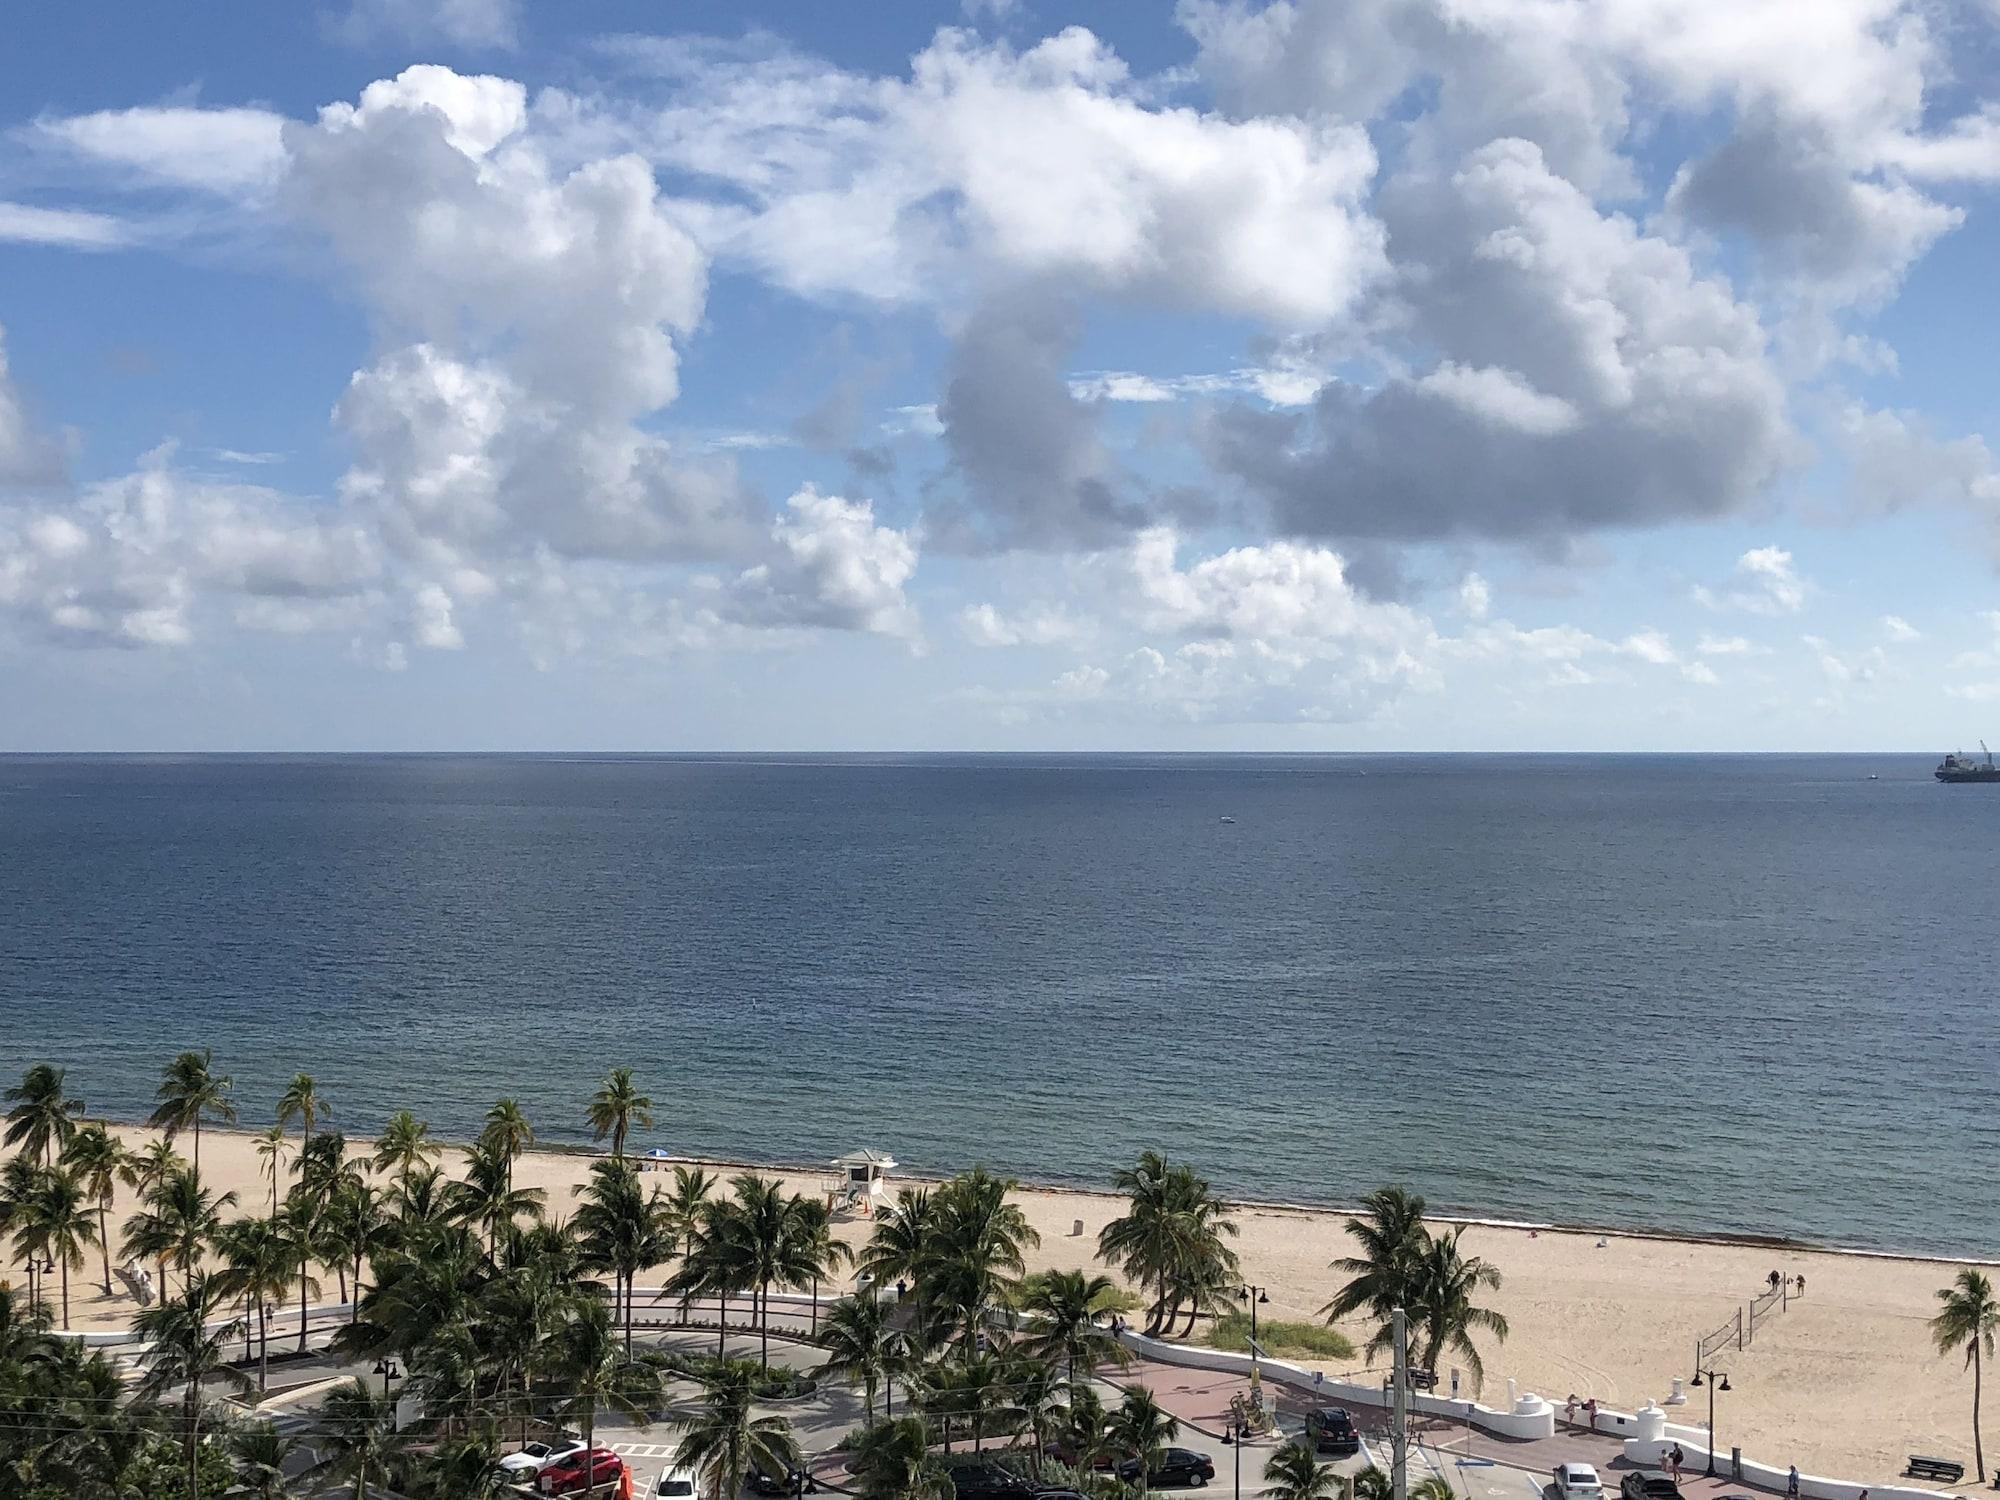 DoubleTree Fort Lauderdale Hotels - Bahia Mar